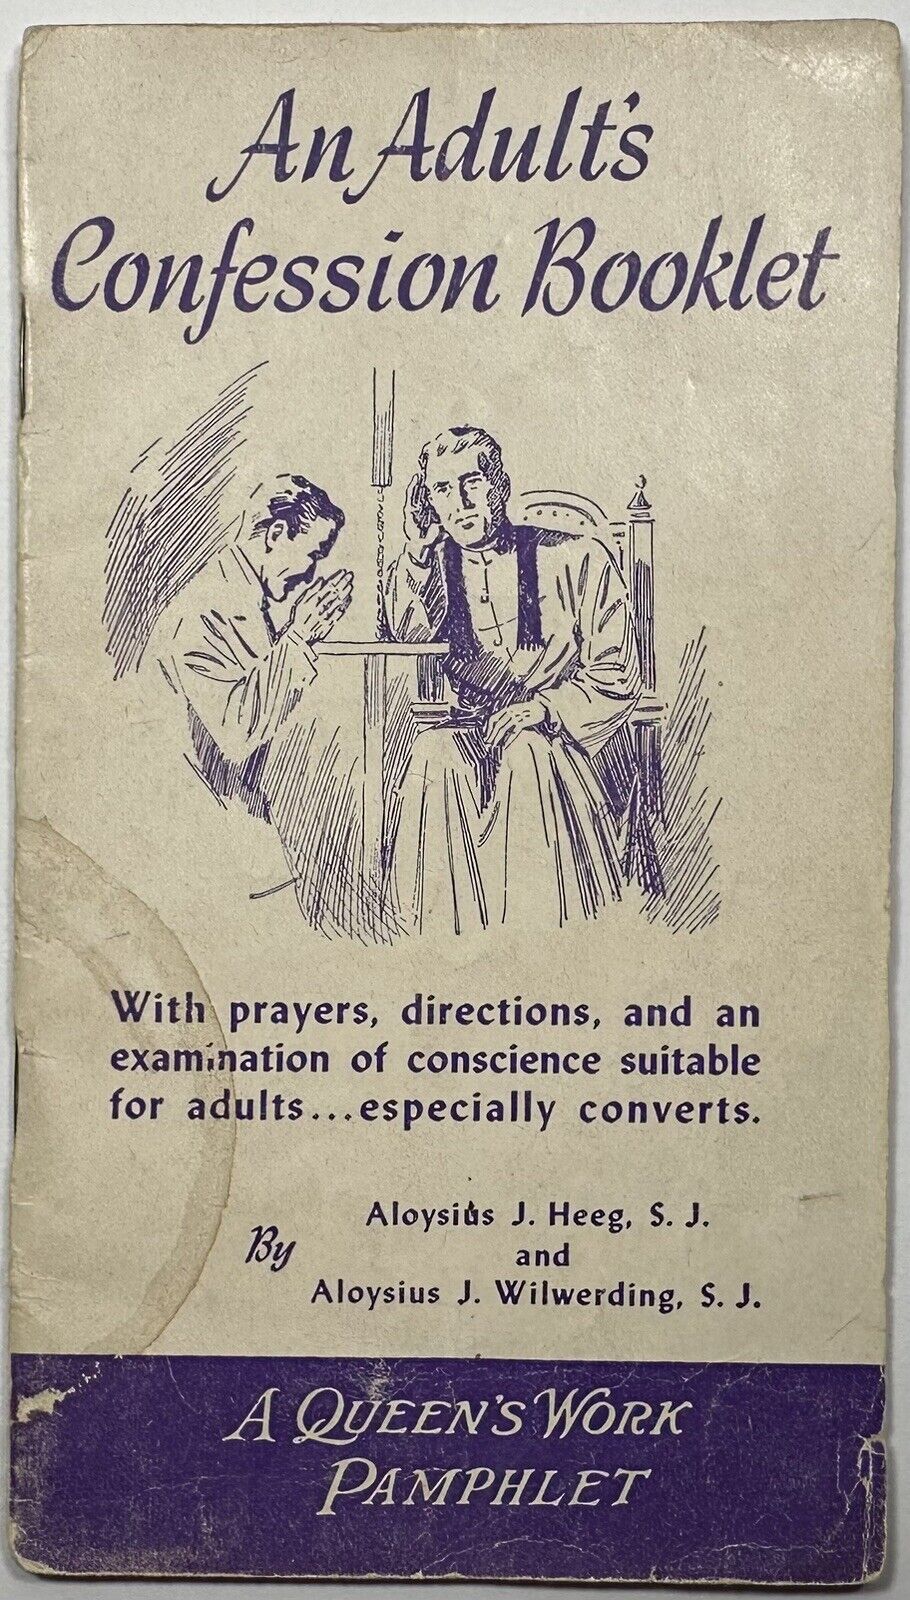 An Adult’s Confession Booklet, Vintage 1950 Holy Devotional Booklet.